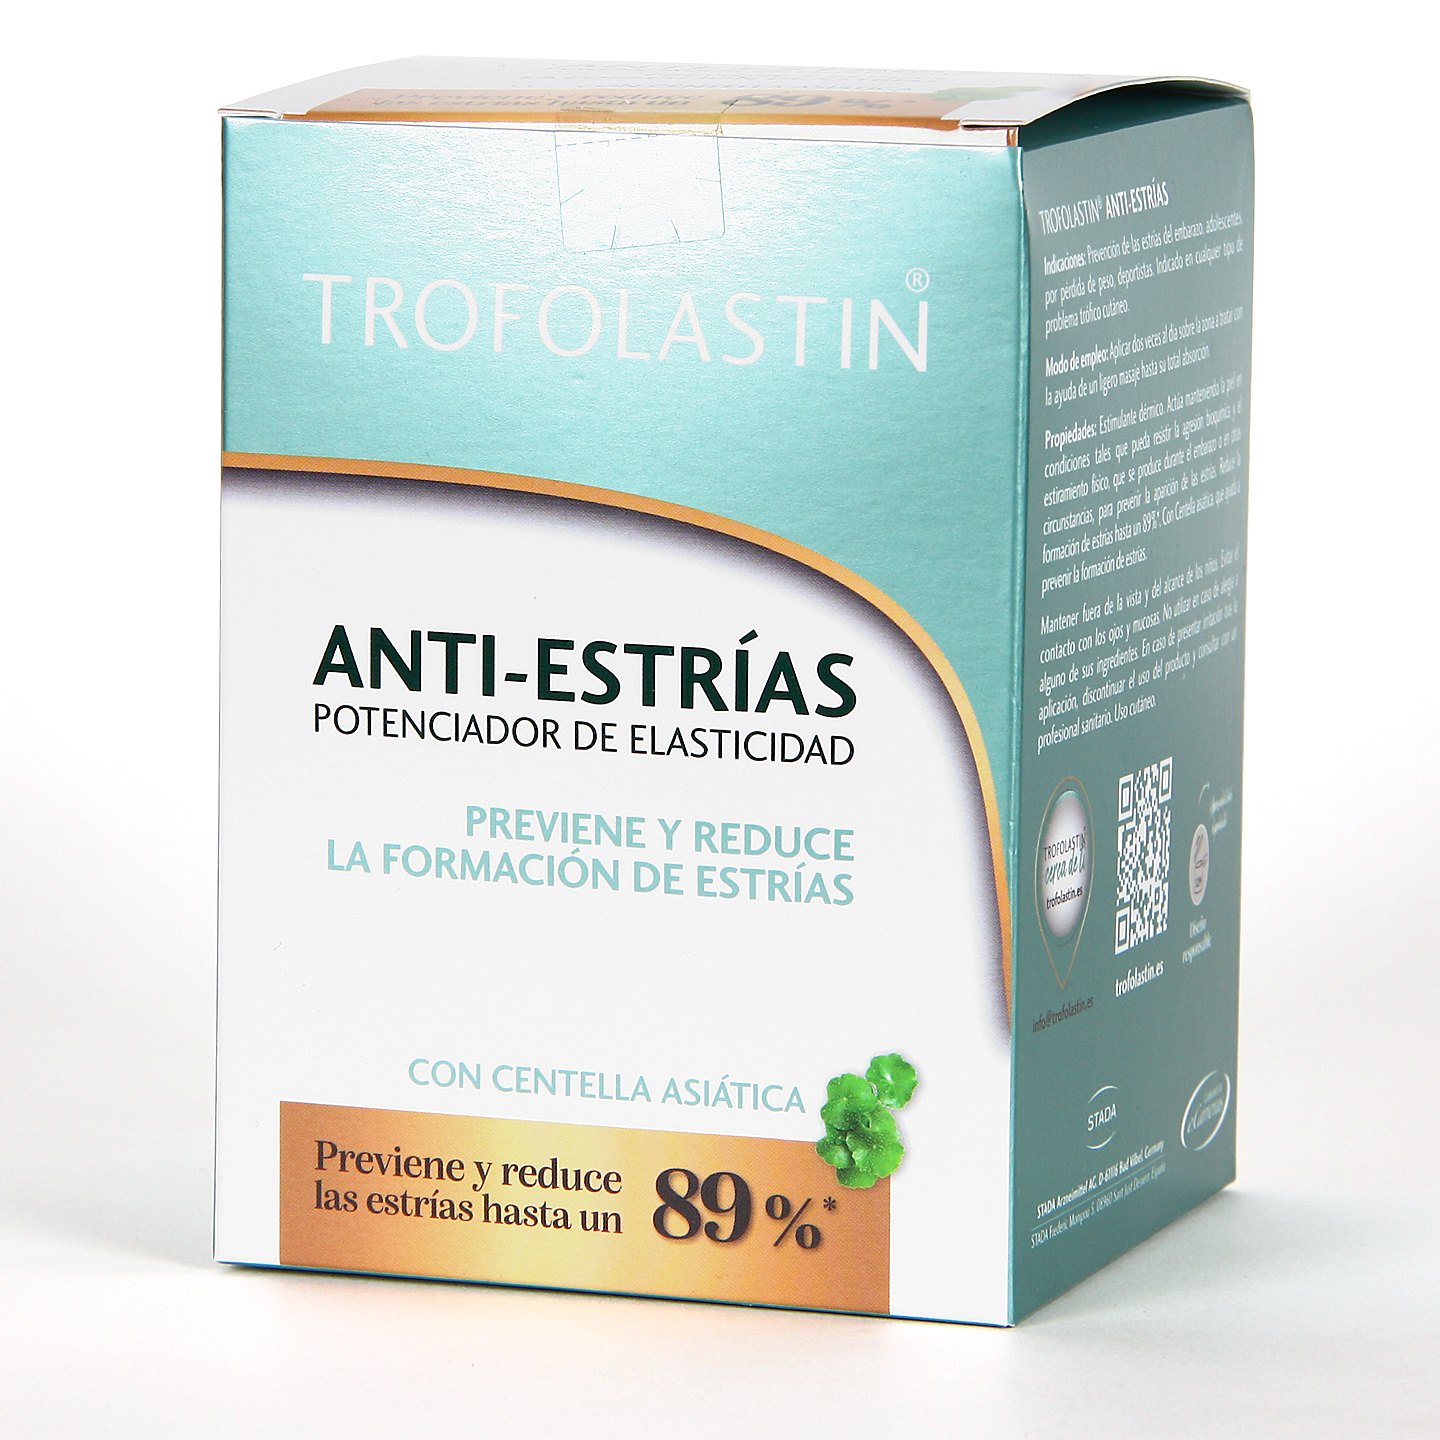 Trofolastin Mami Box Anti-estrÍas 250 ml + Reafirmante 200 ml +